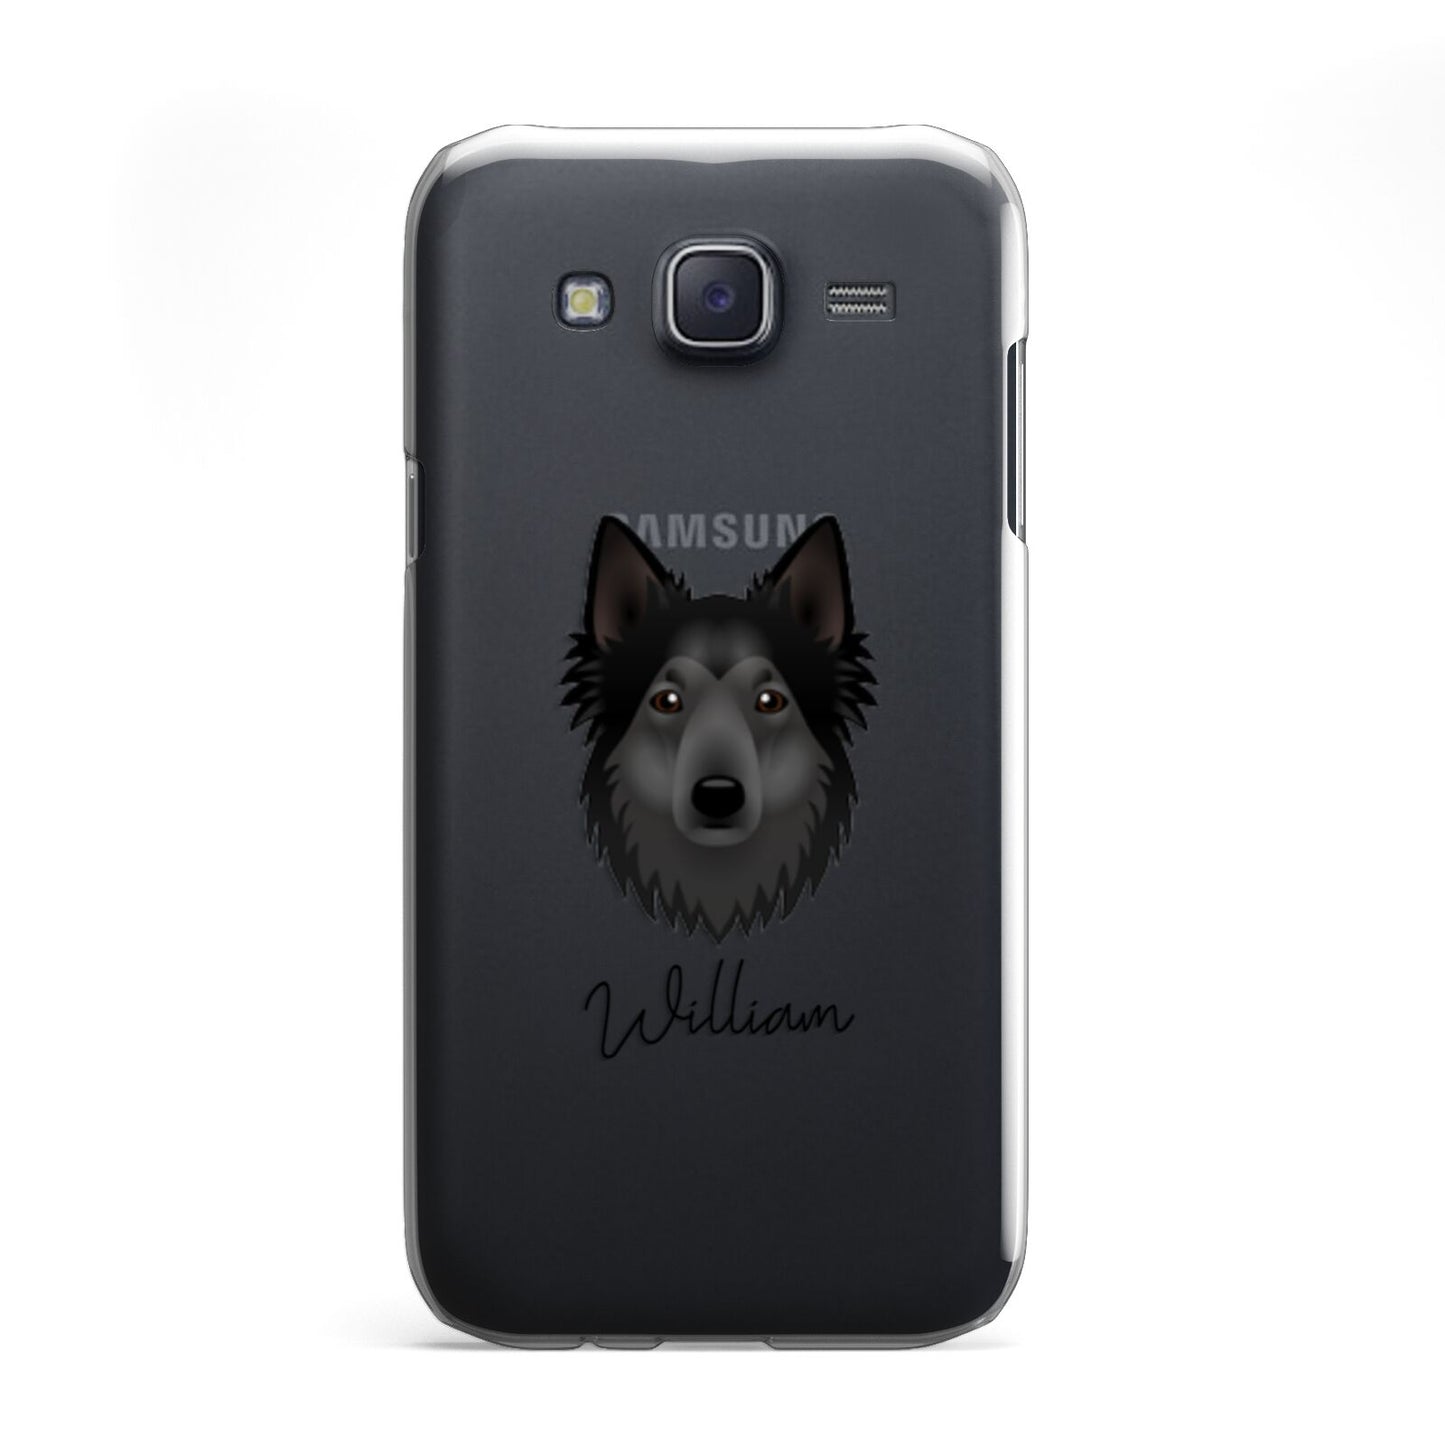 Shollie Personalised Samsung Galaxy J5 Case